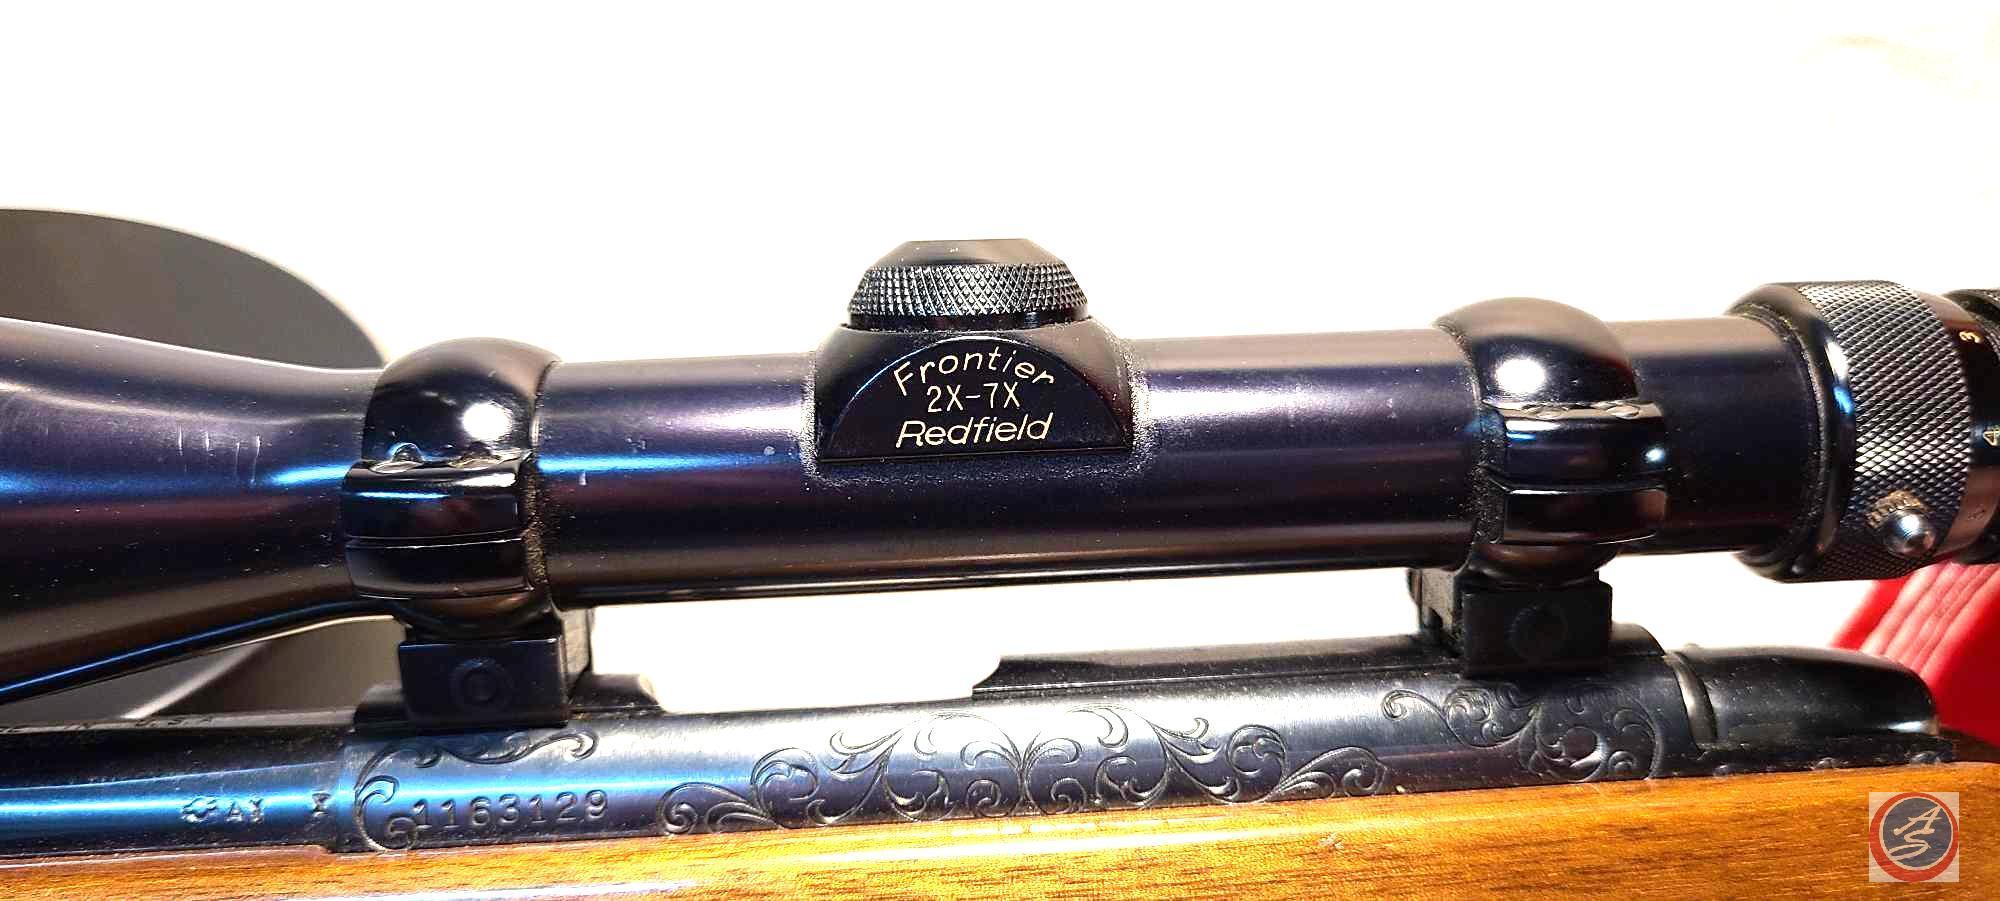 Manufacturer: Remington Arms Co. Inc. CaliberGauge: 22 Caliber Model: 541-S Custom Sporter